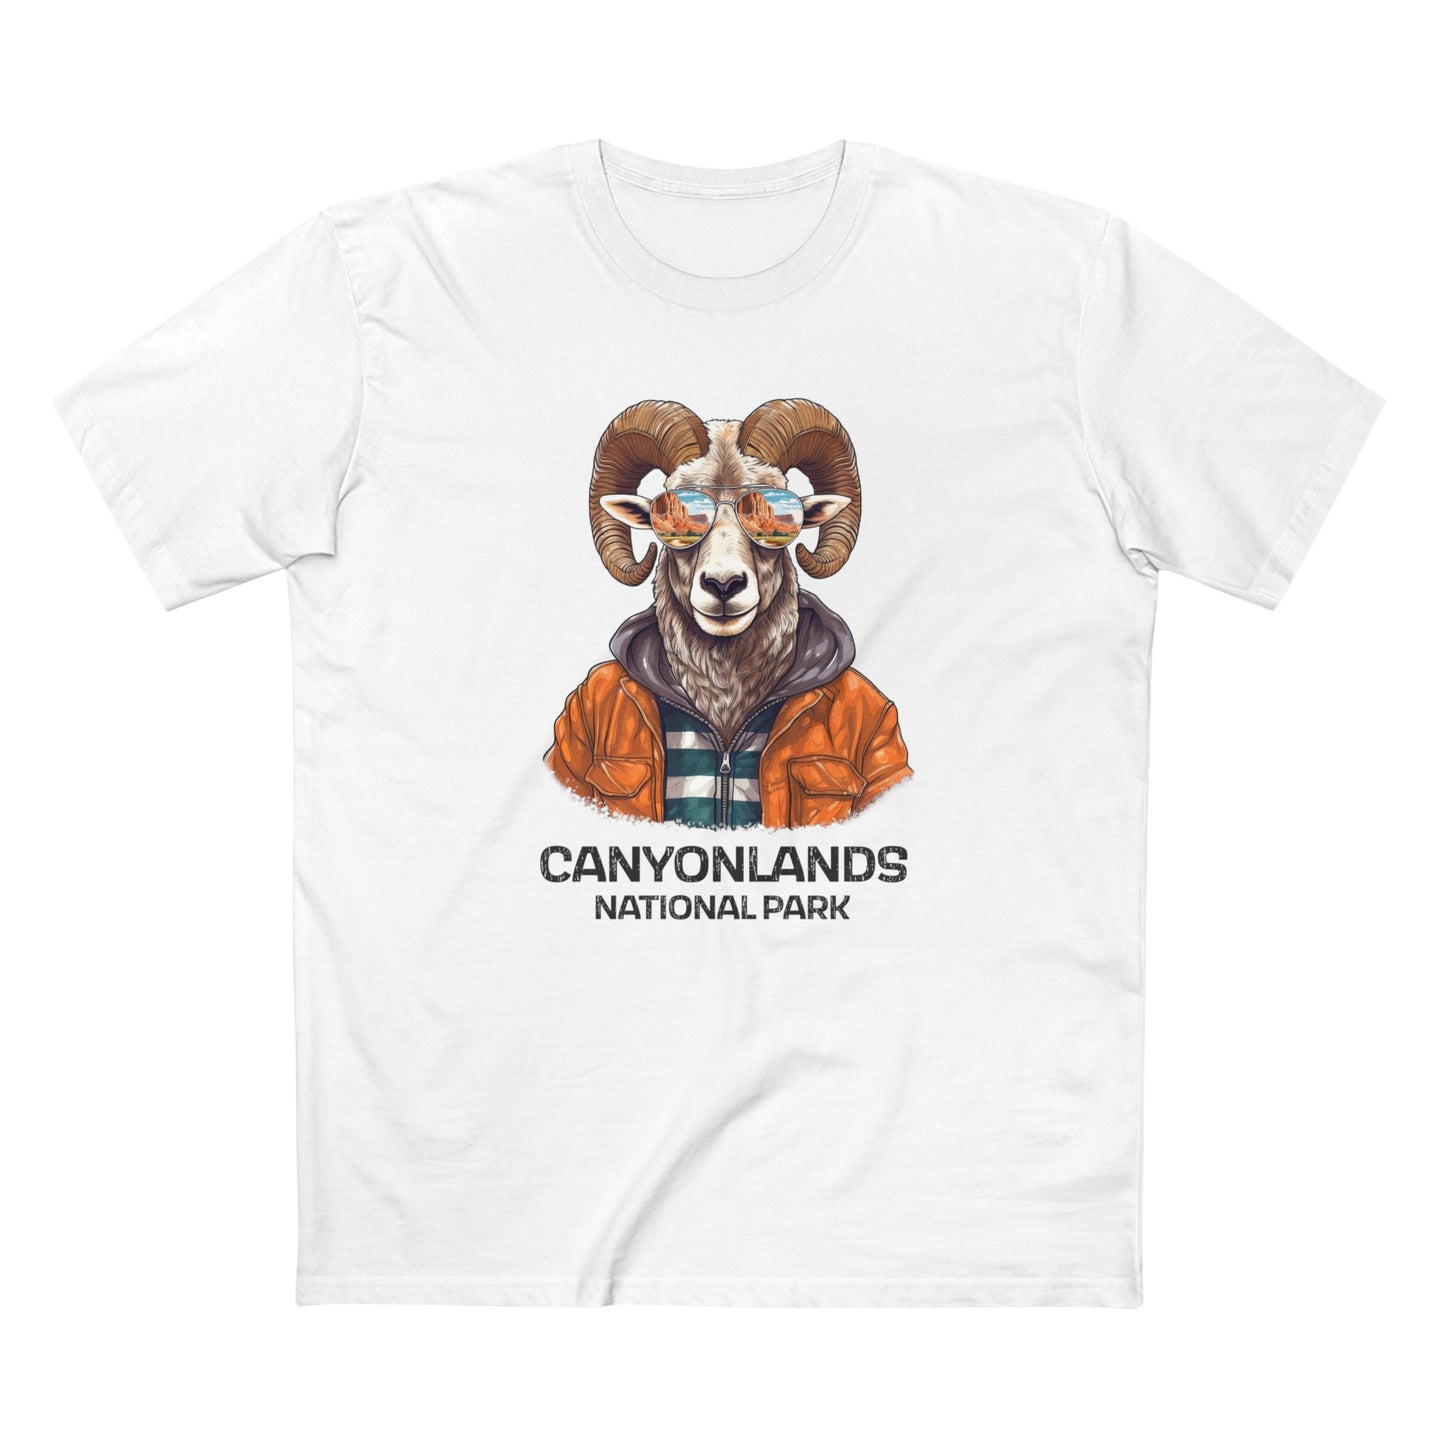 Canyonlands National Park T-Shirt - Bighorn Sheep